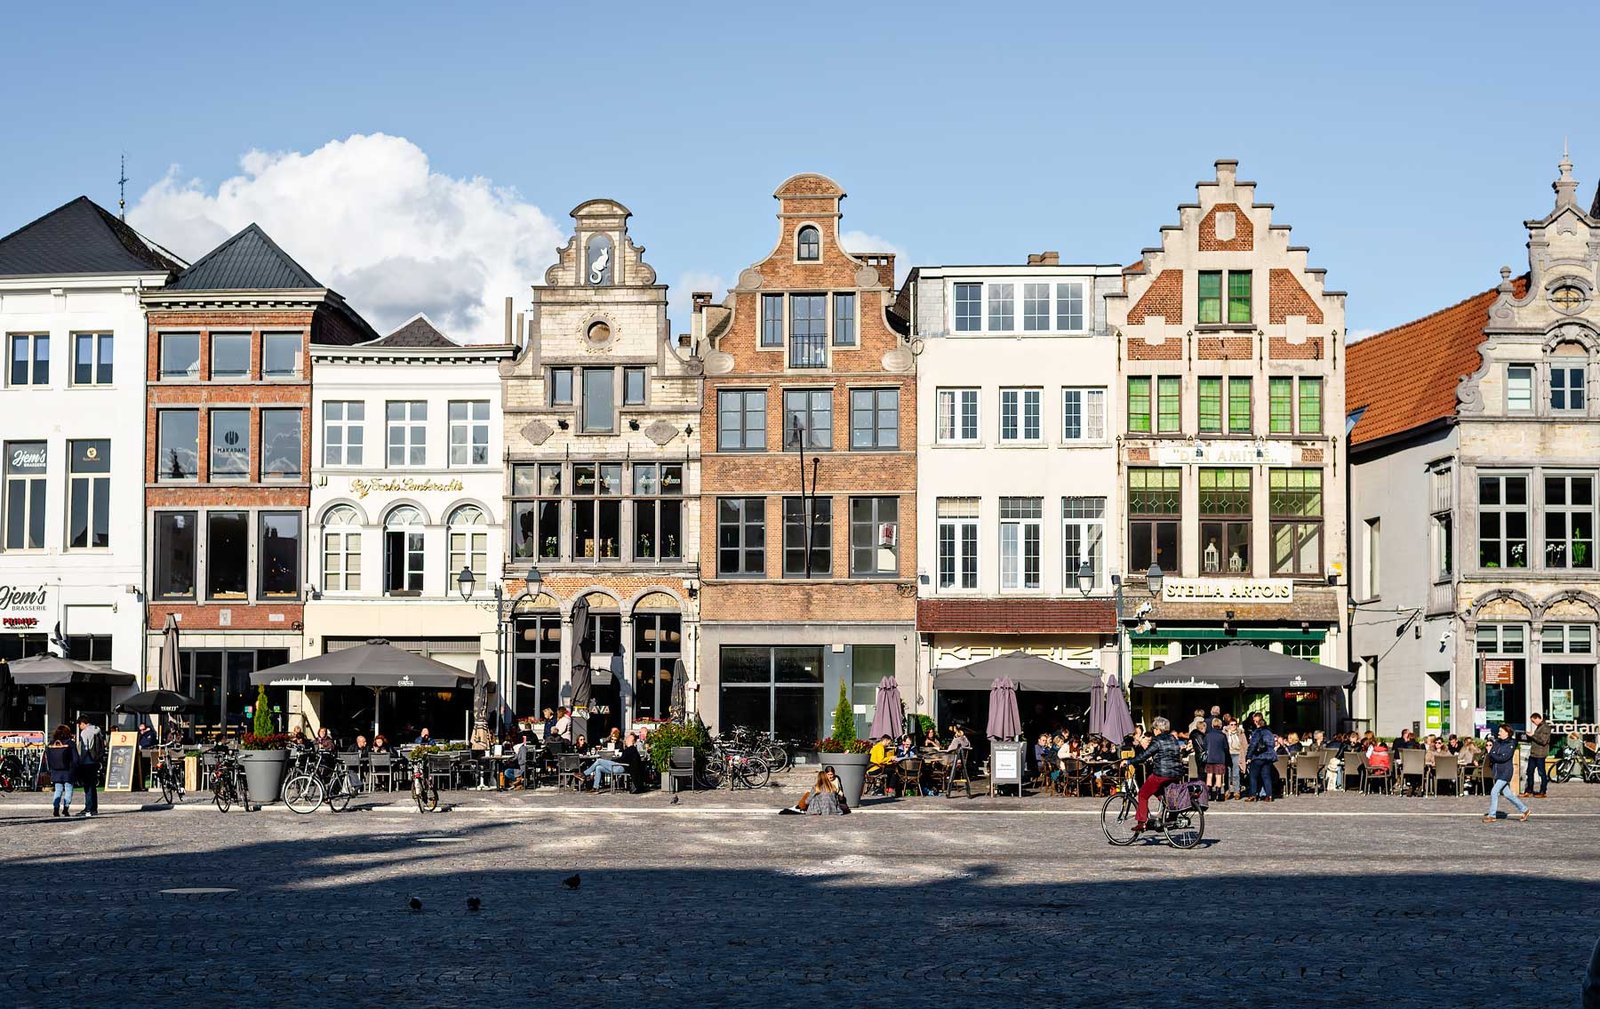 Grote Markt in Mechelen. Read my blog post '11 Great Things to Do in Mechelen, Belgium' for more tips